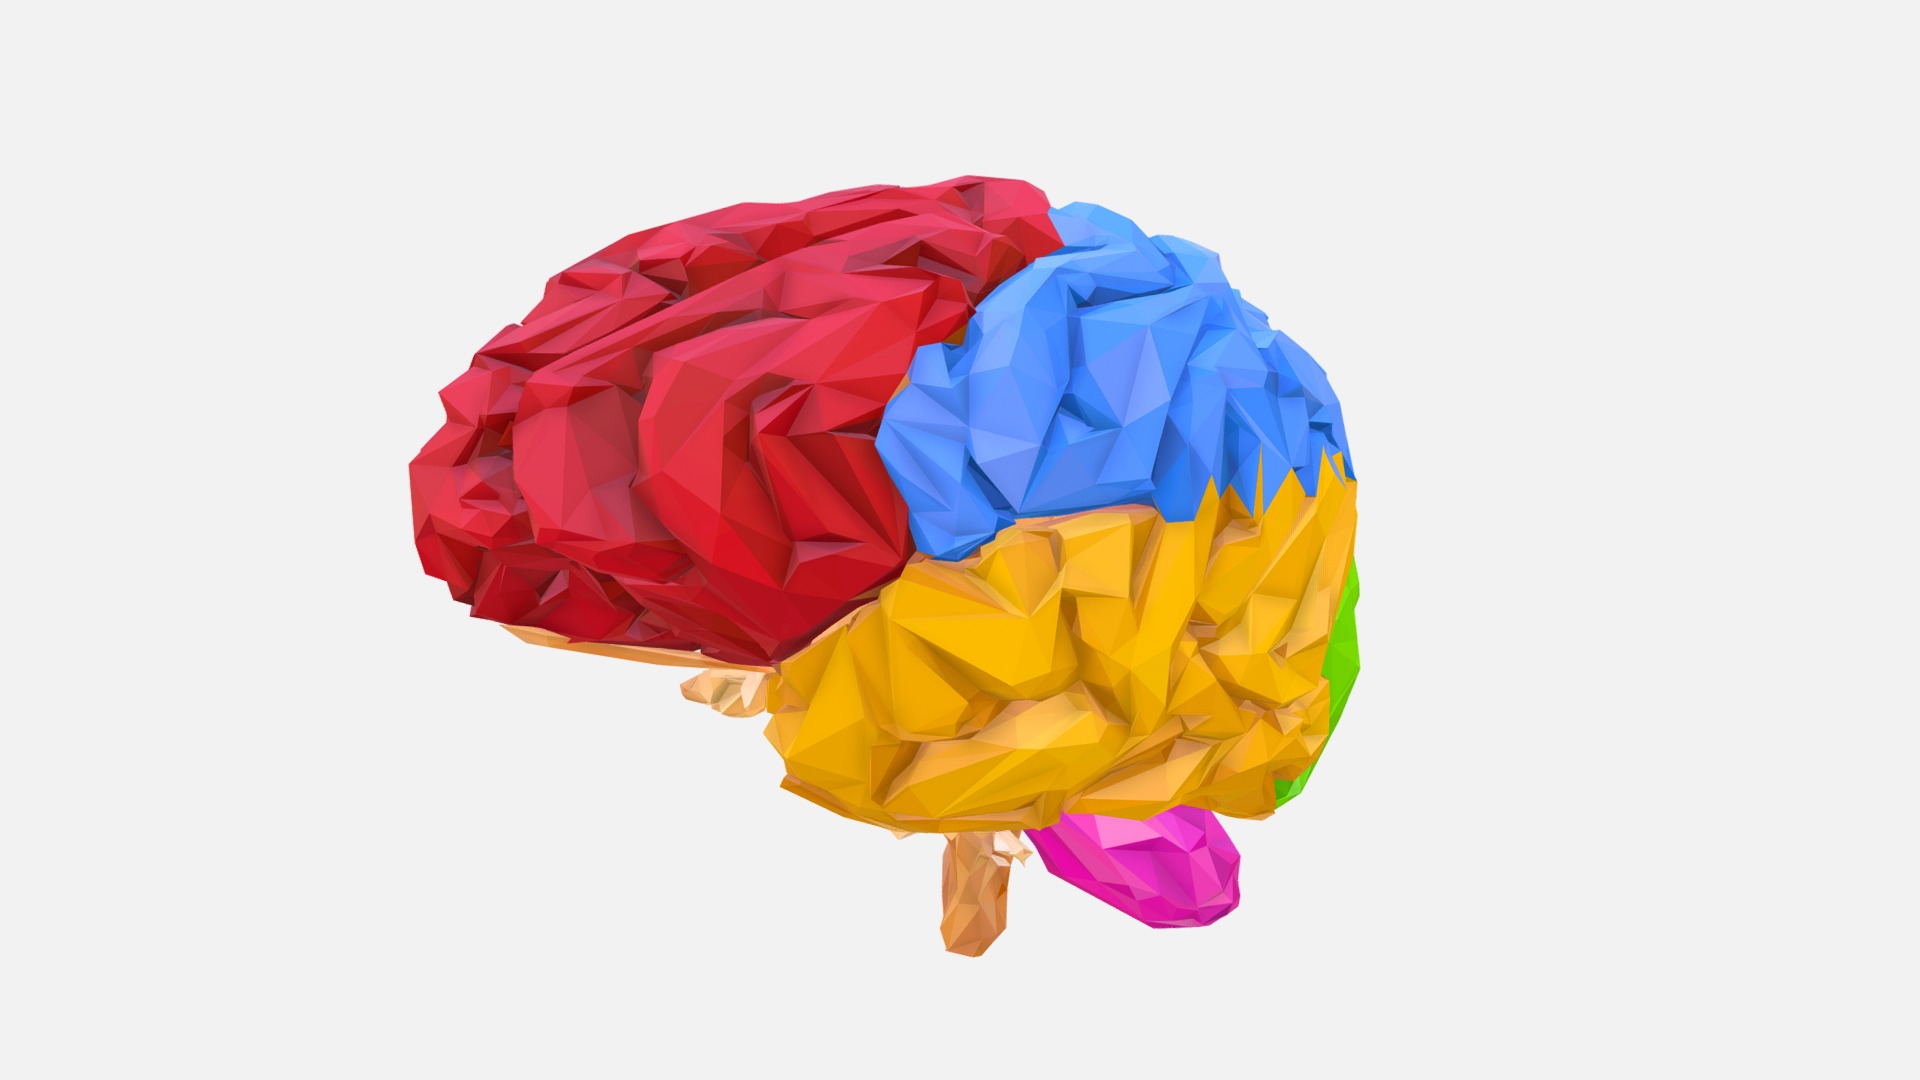 3D model Low Polygon Art Medical Brain Color 02 - This is a 3D model of the Low Polygon Art Medical Brain Color 02. The 3D model is about a pair of colorful umbrellas.